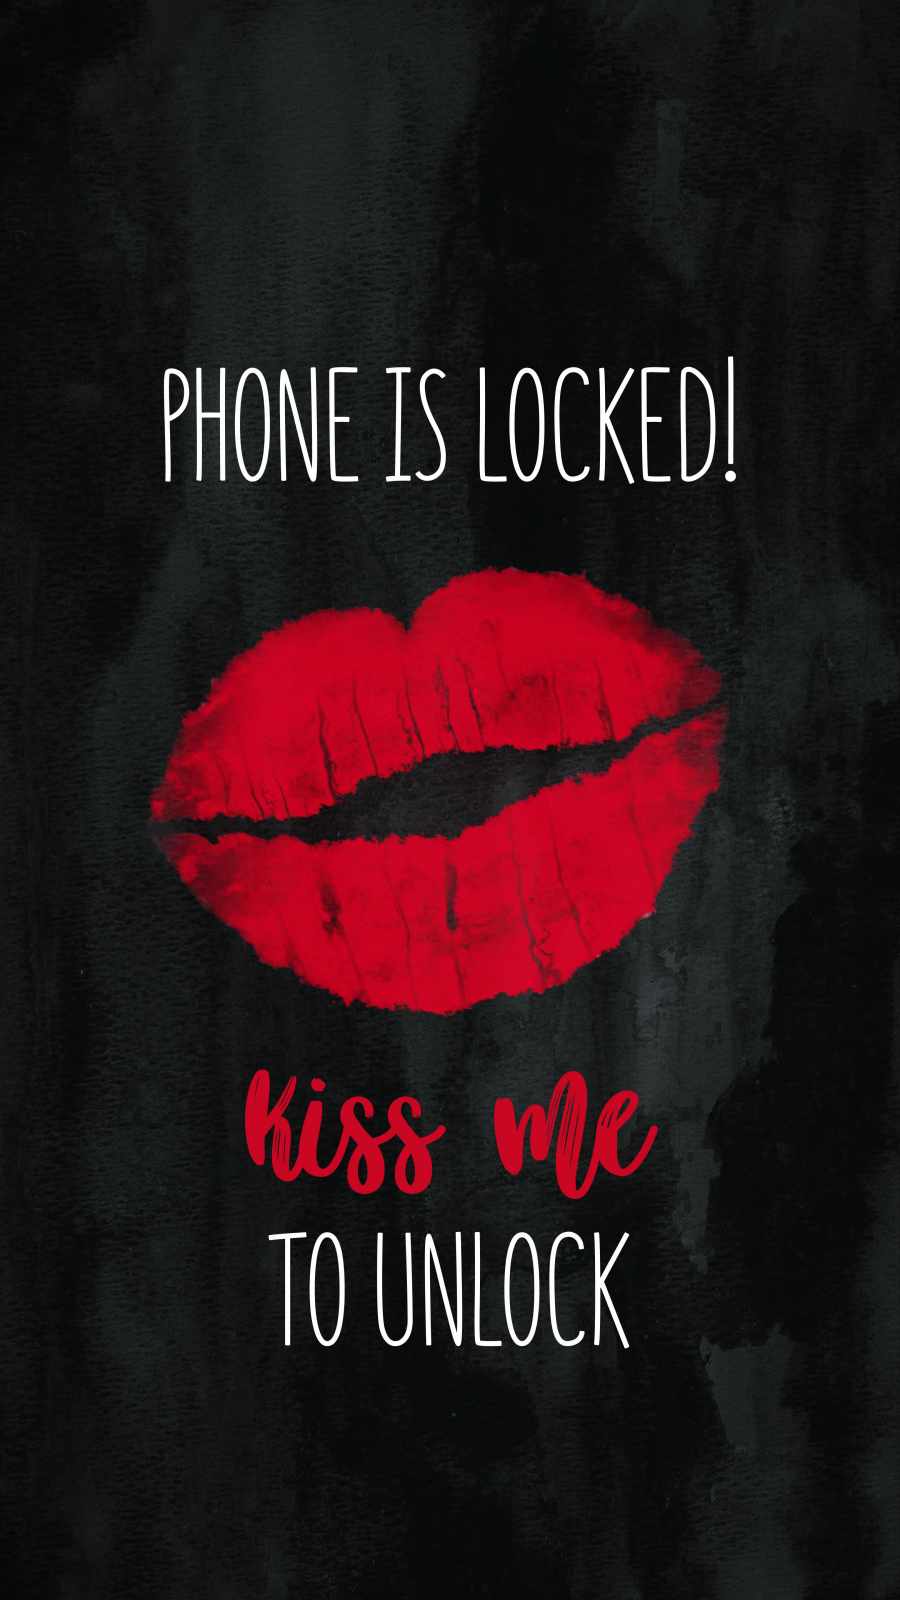 Kiss Me to Unlock iPhone Wallpaper HD